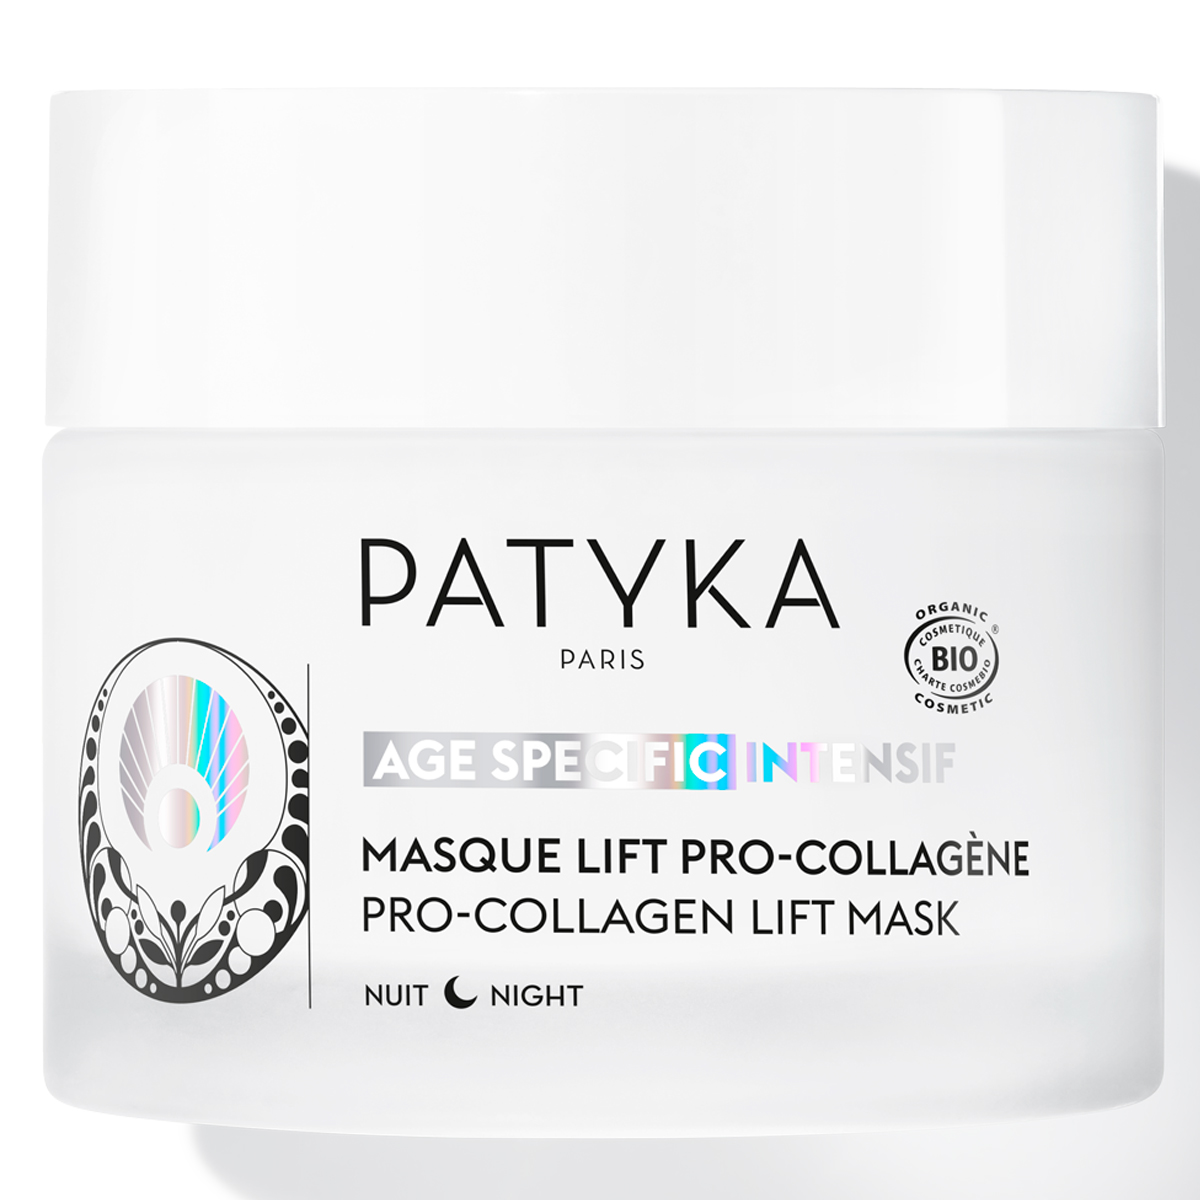 Patyka Ночная маска для лица Pro-Collagen Lift Mask, 50 мл (Patyka, Age-Specific Intensif)